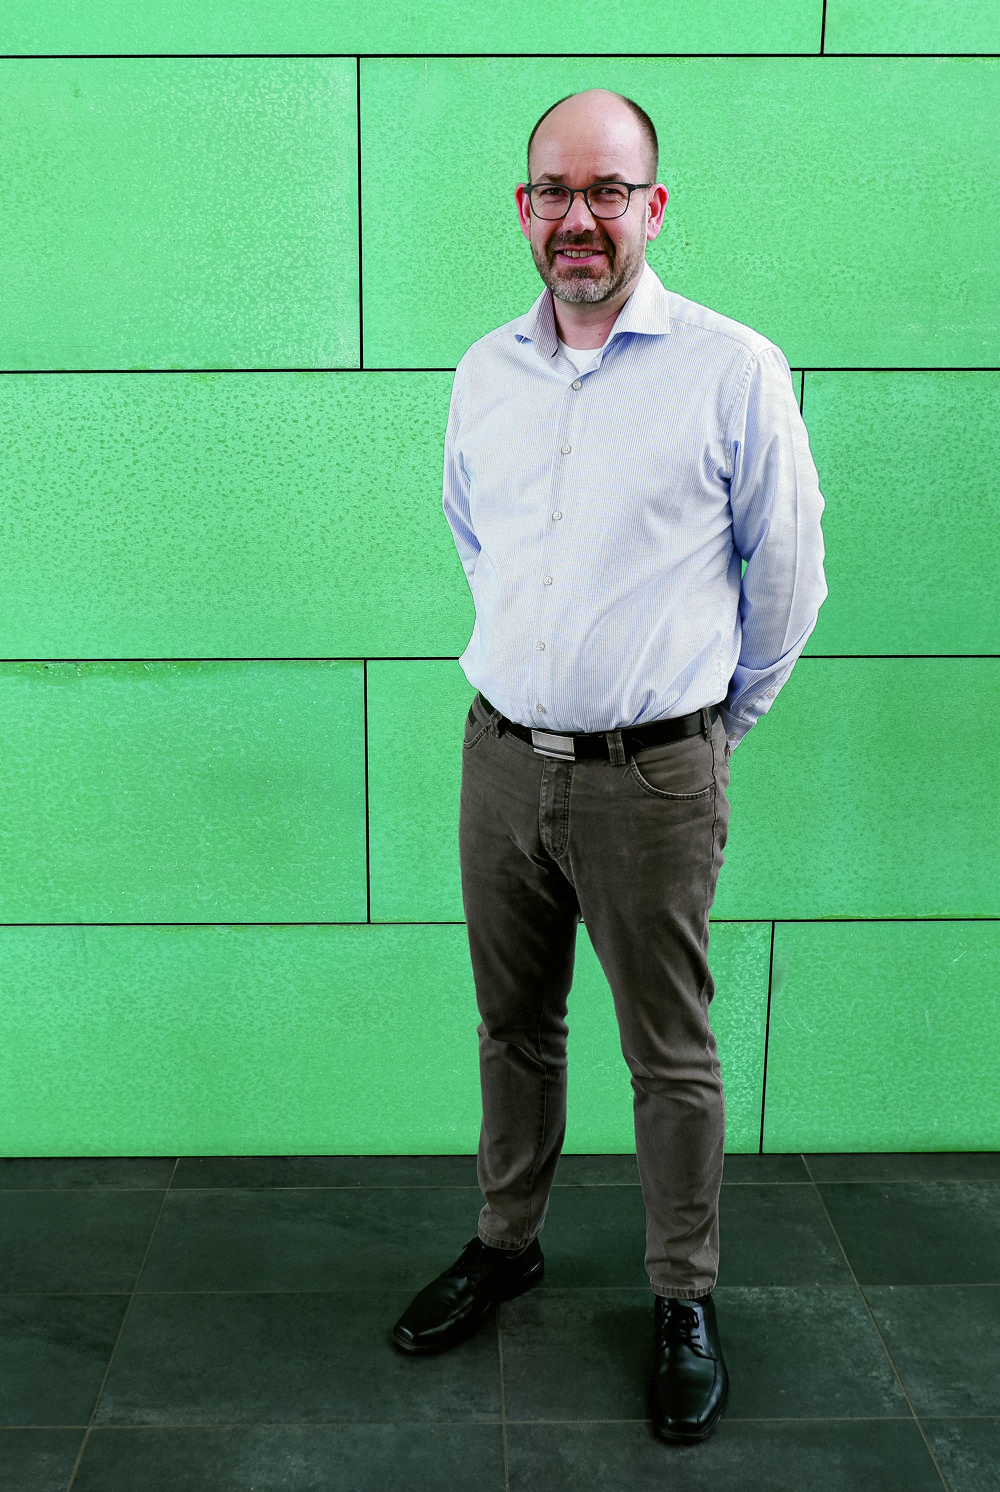 Christer Mysling, CEO, Budweg Calipers, glæder sig til at fortsætte det fynske firmas strategi. Foto: Budweg Calipers.